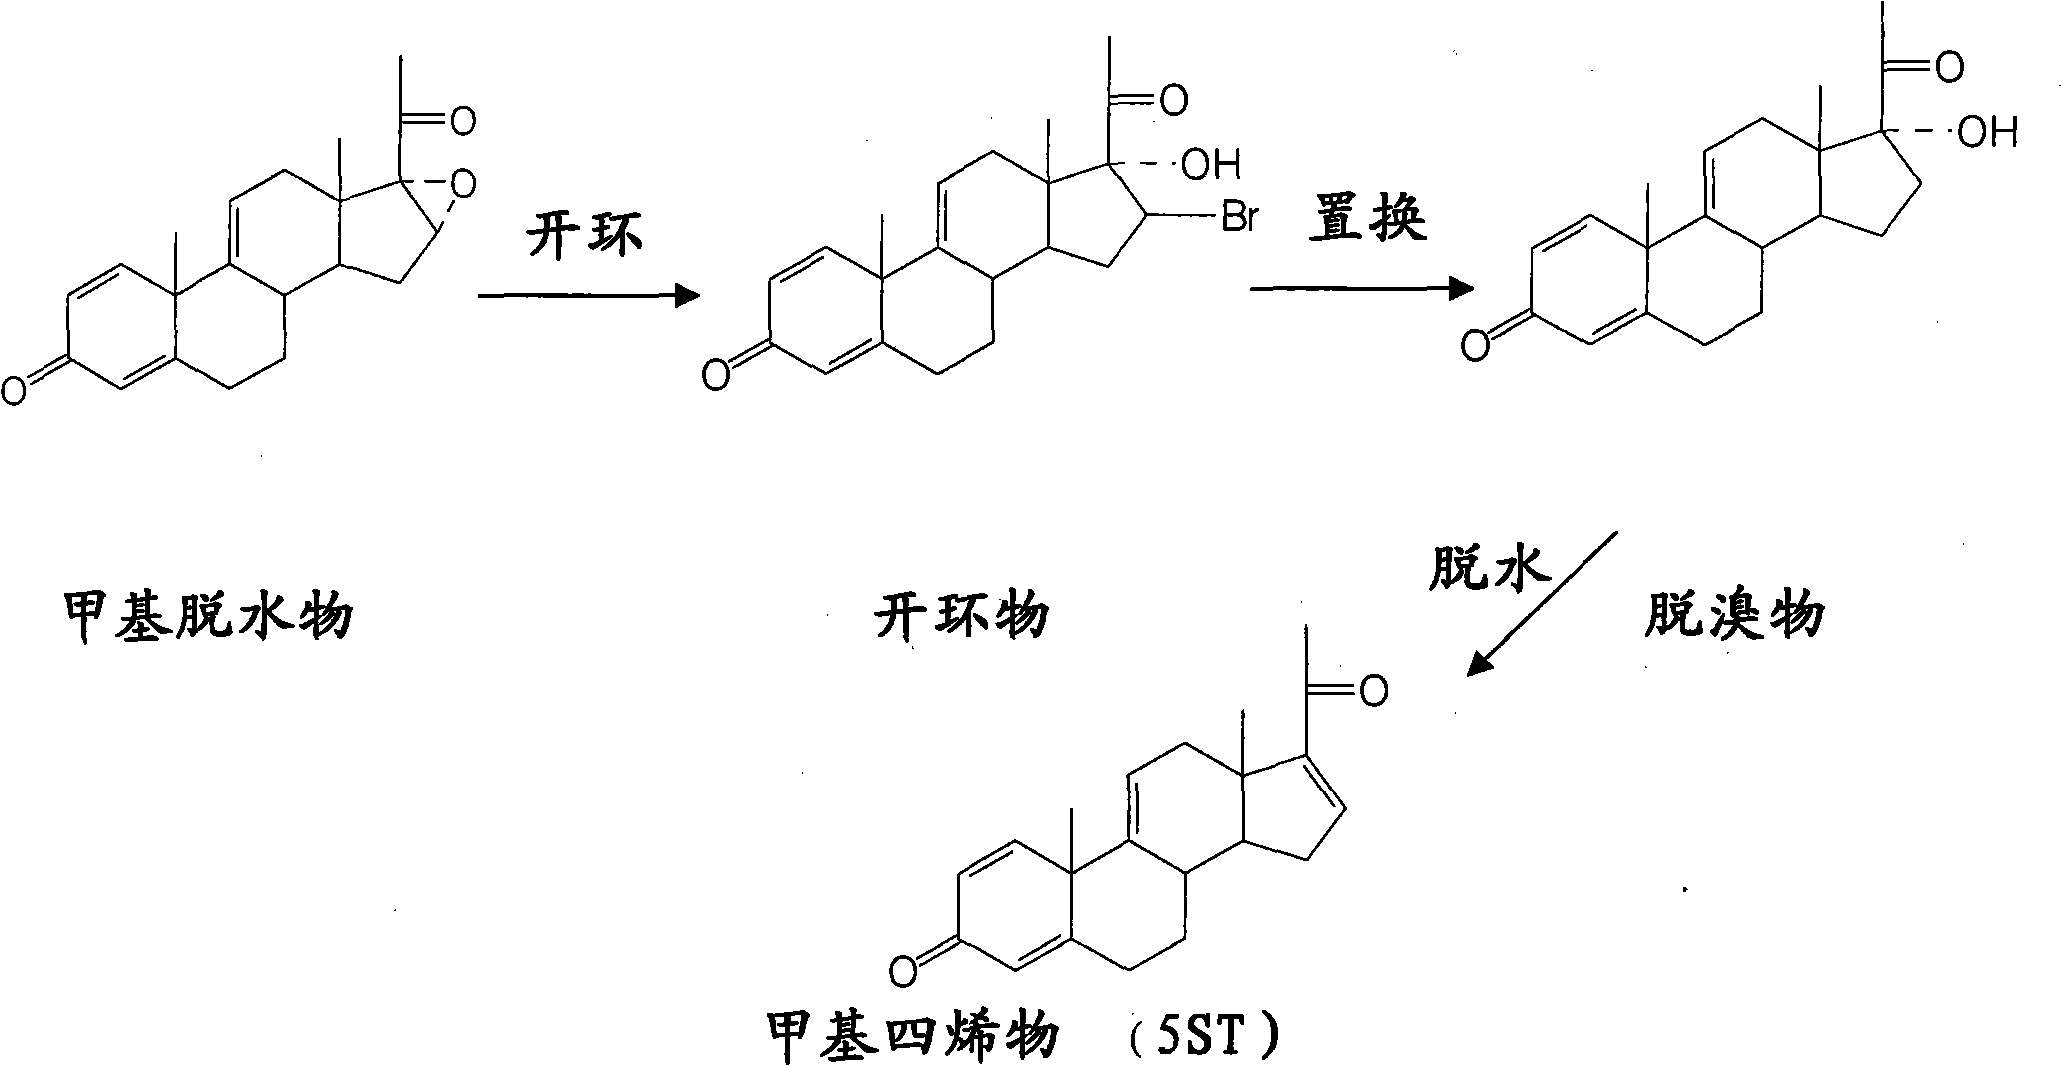 Method for producing important steroid hormone dexamethasone methyl tetraenes intermediate